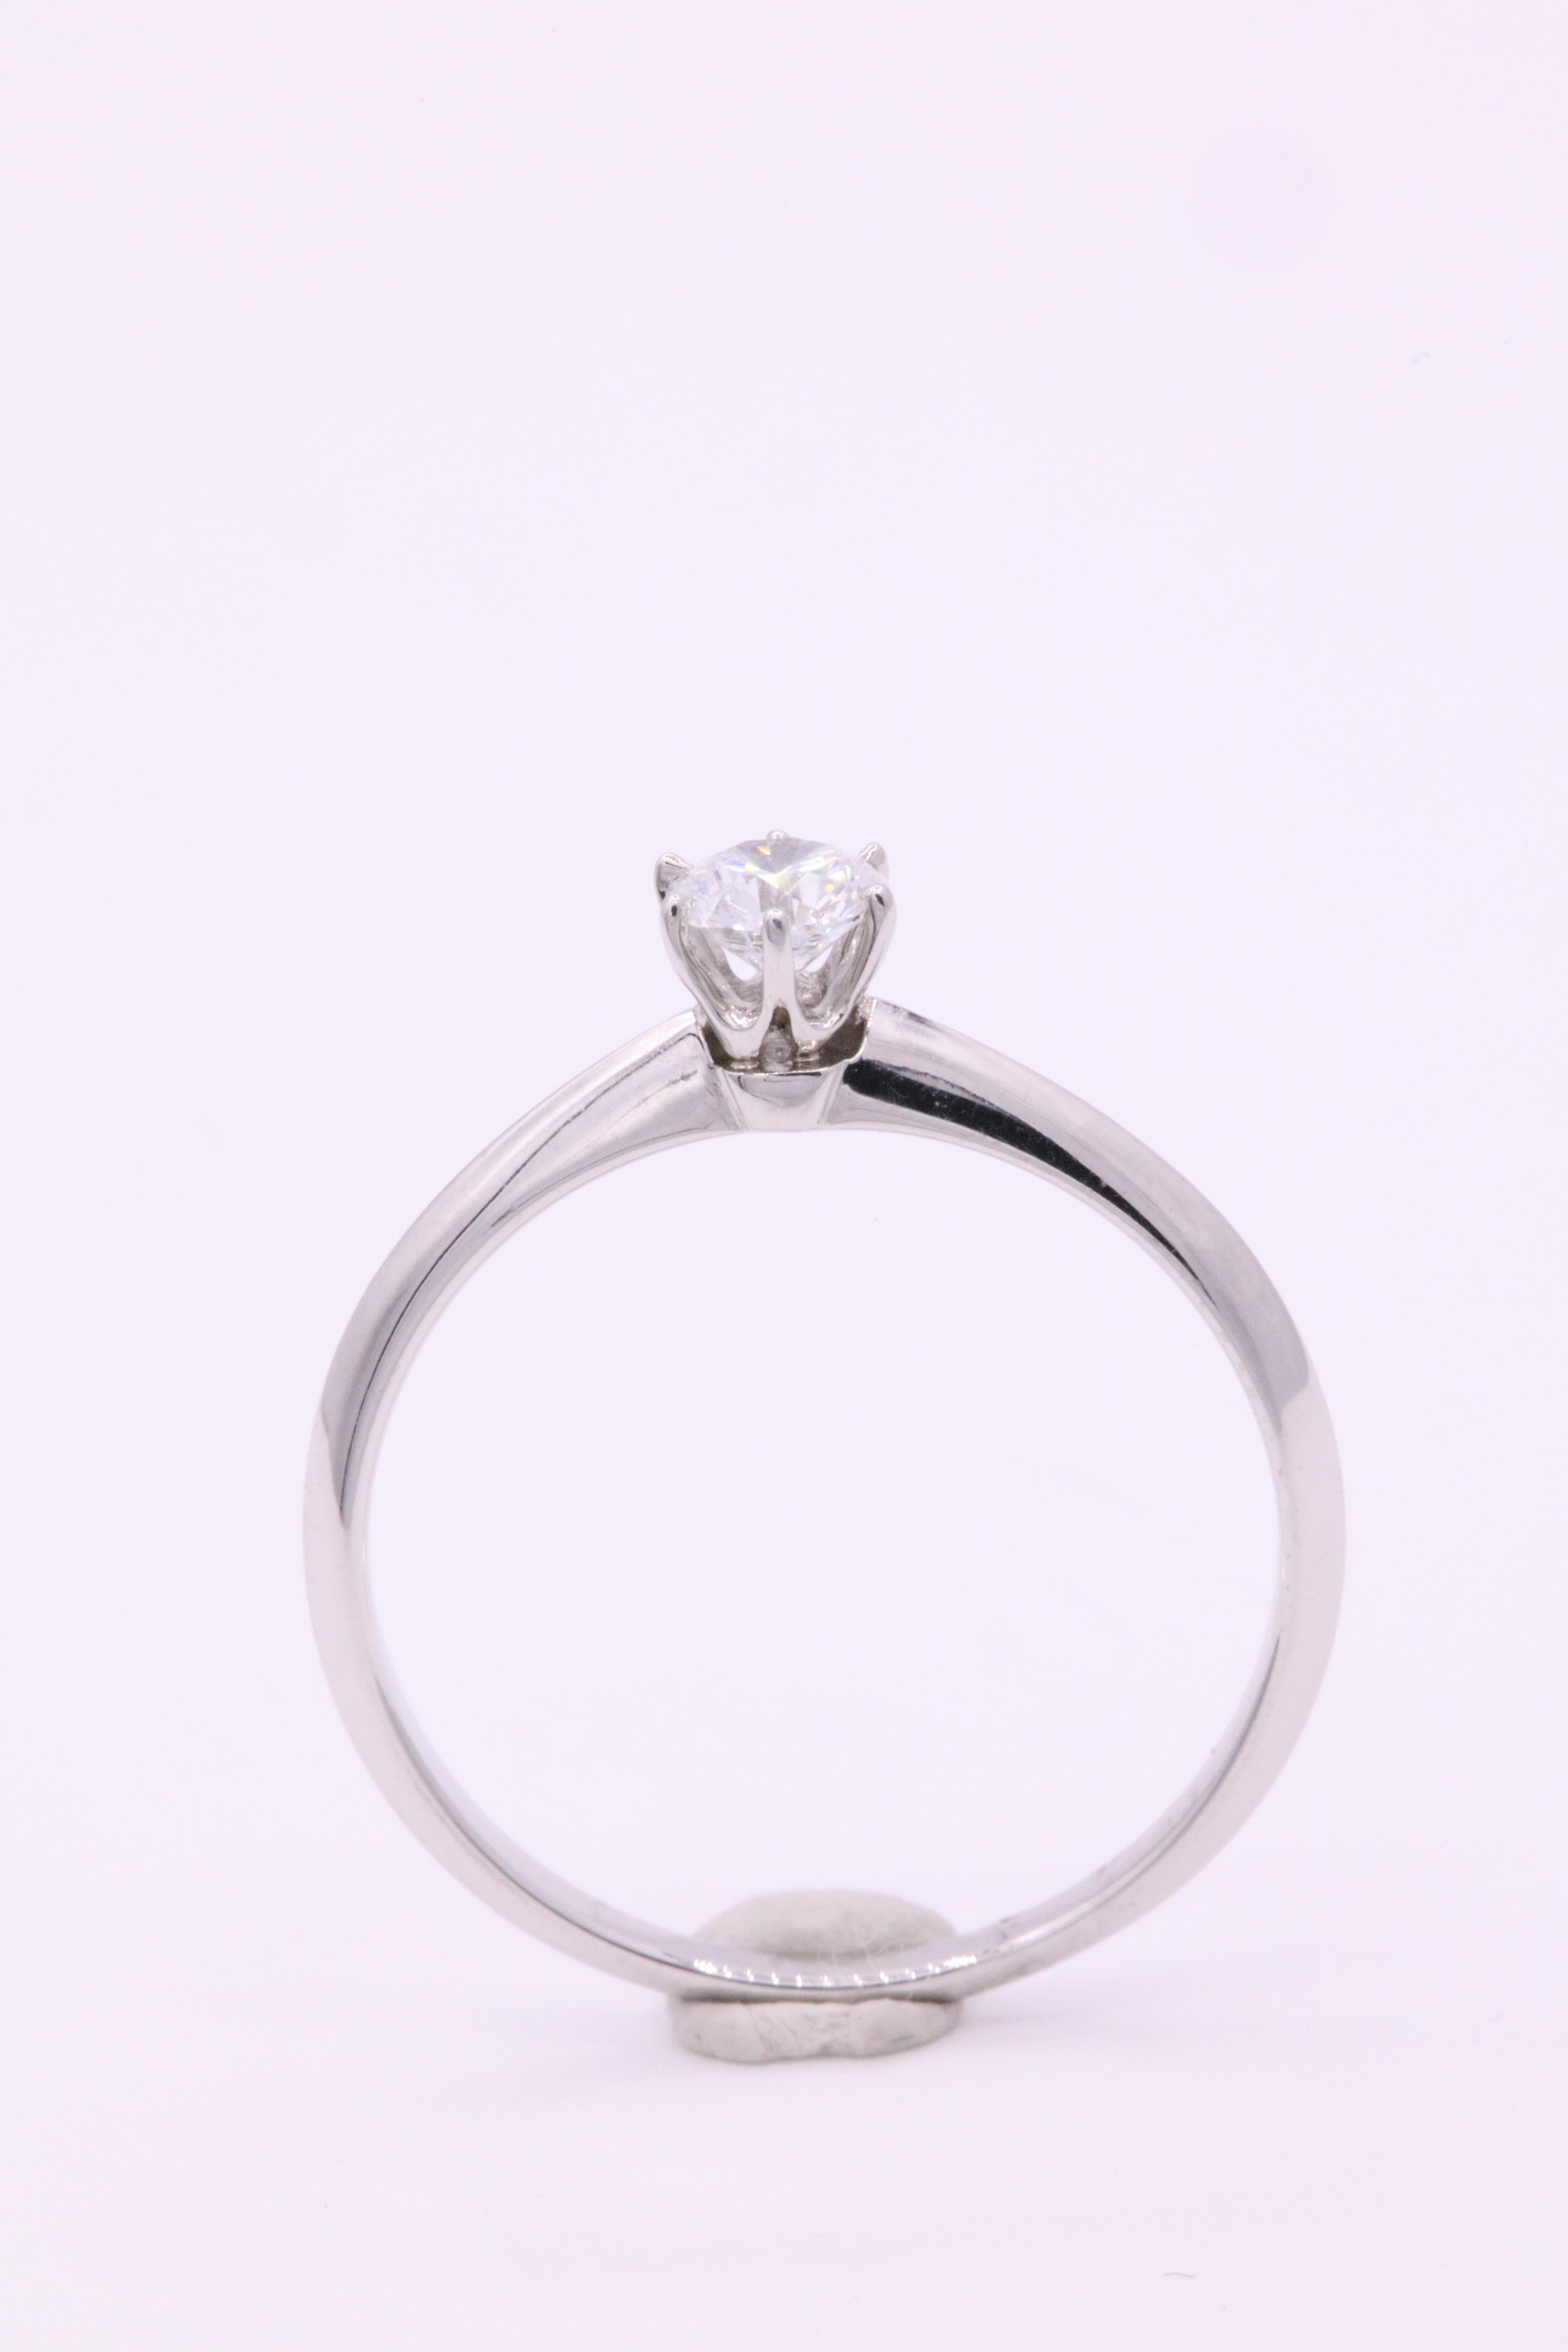 Round Cut Tiffany & Co. Diamond Solitaire Engagement Ring 0.30 Carat F VS1 Platinum